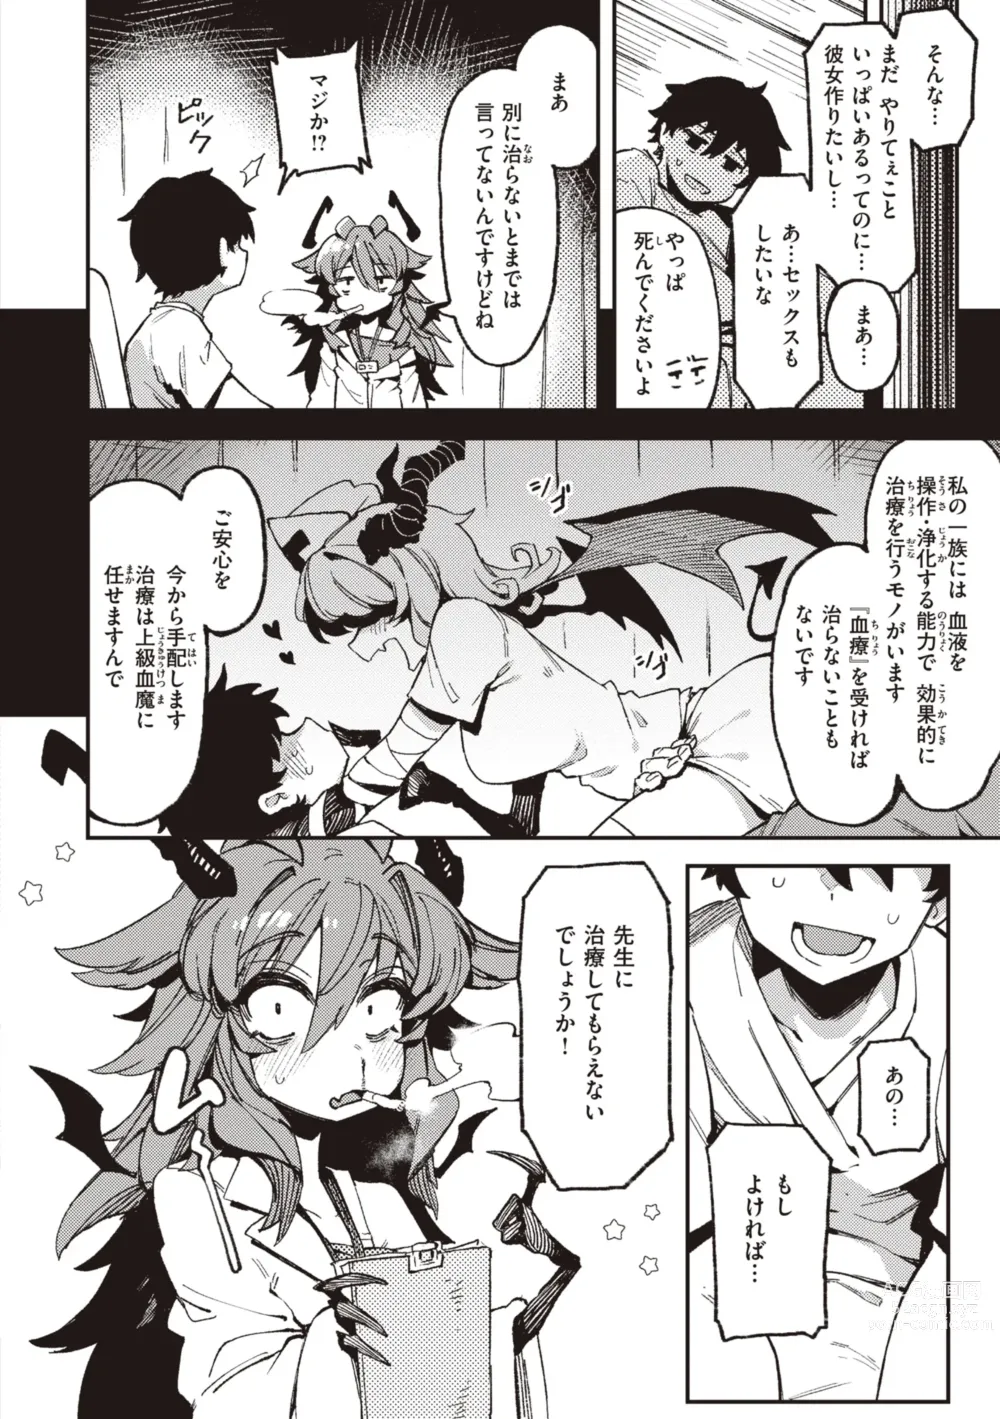 Page 6 of manga Ino Megami-tachi - interspecies venus